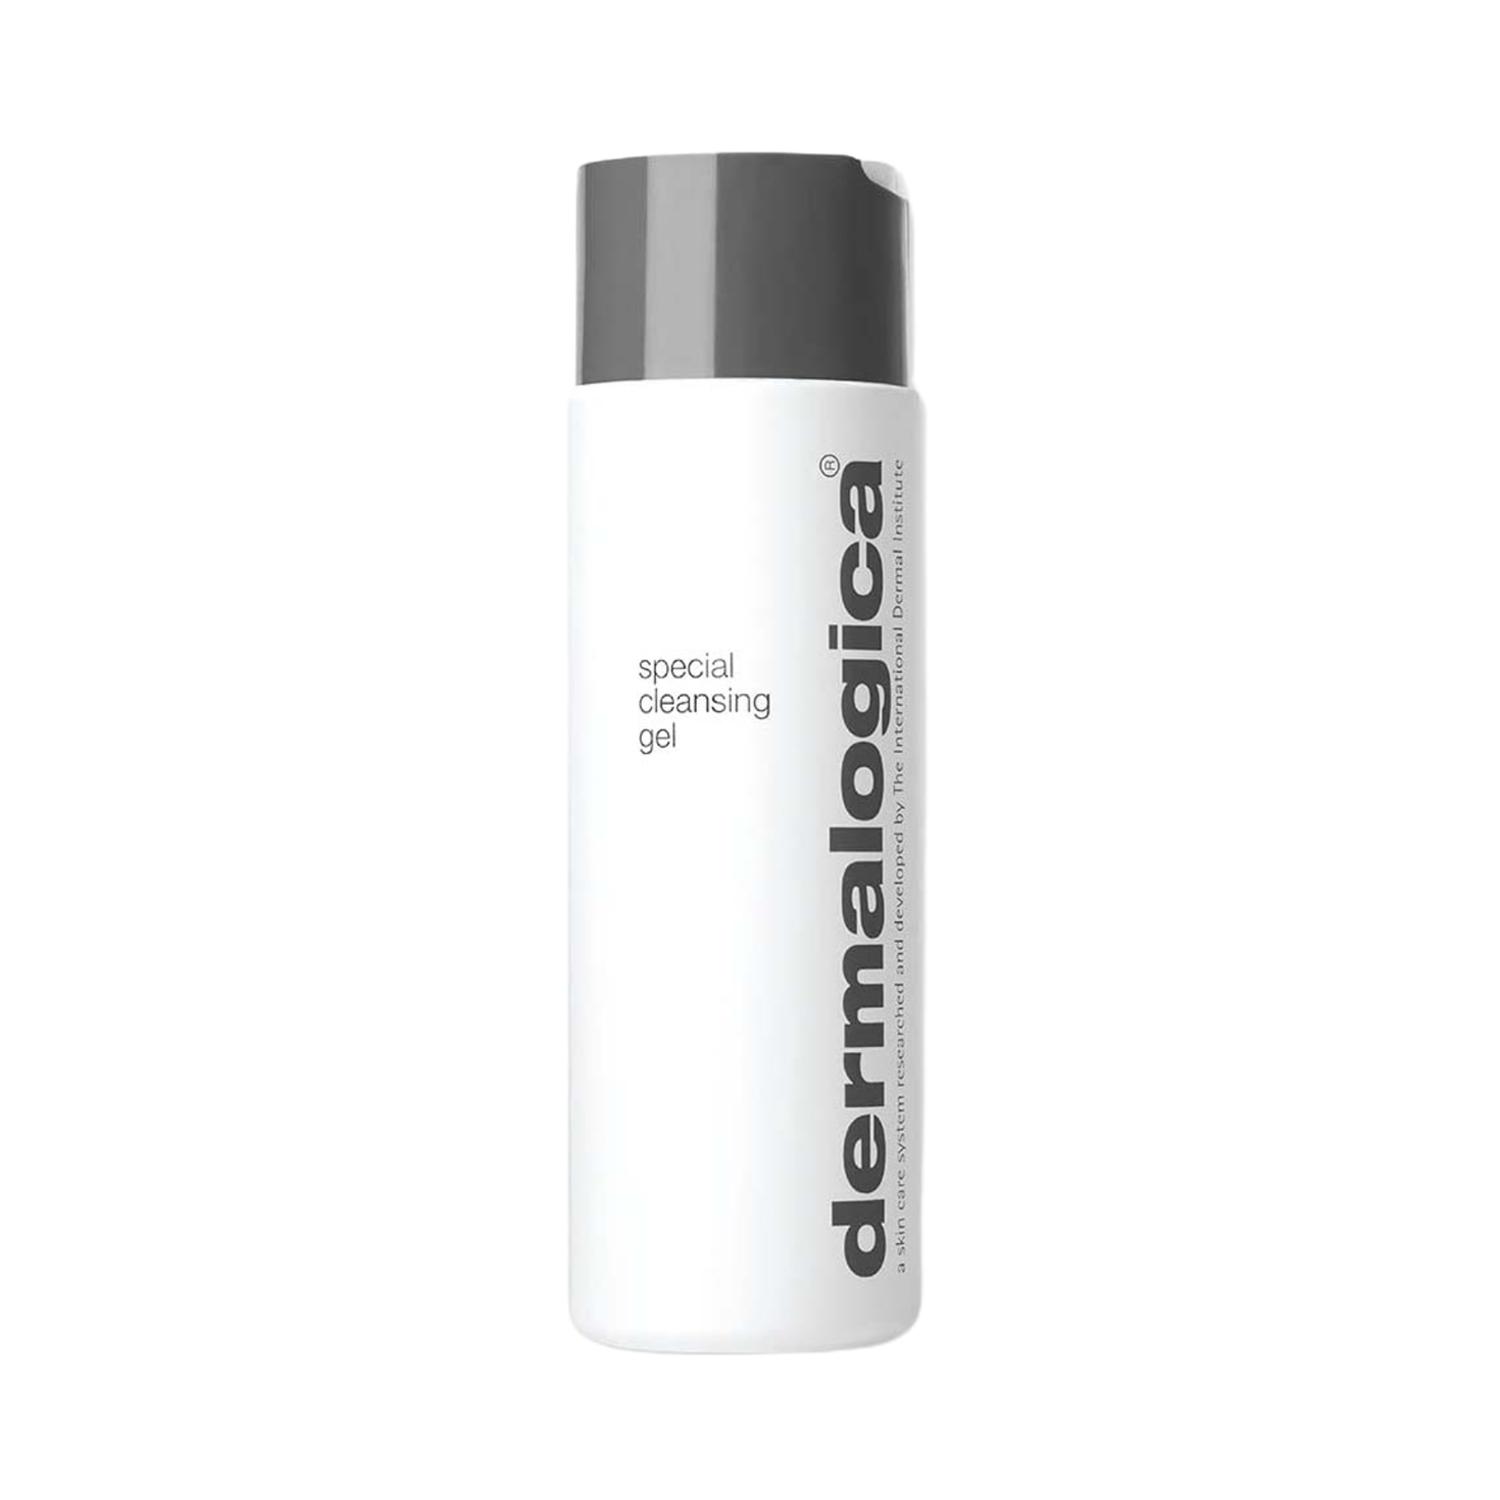 dermalogica special cleansing gel facewash (250ml)